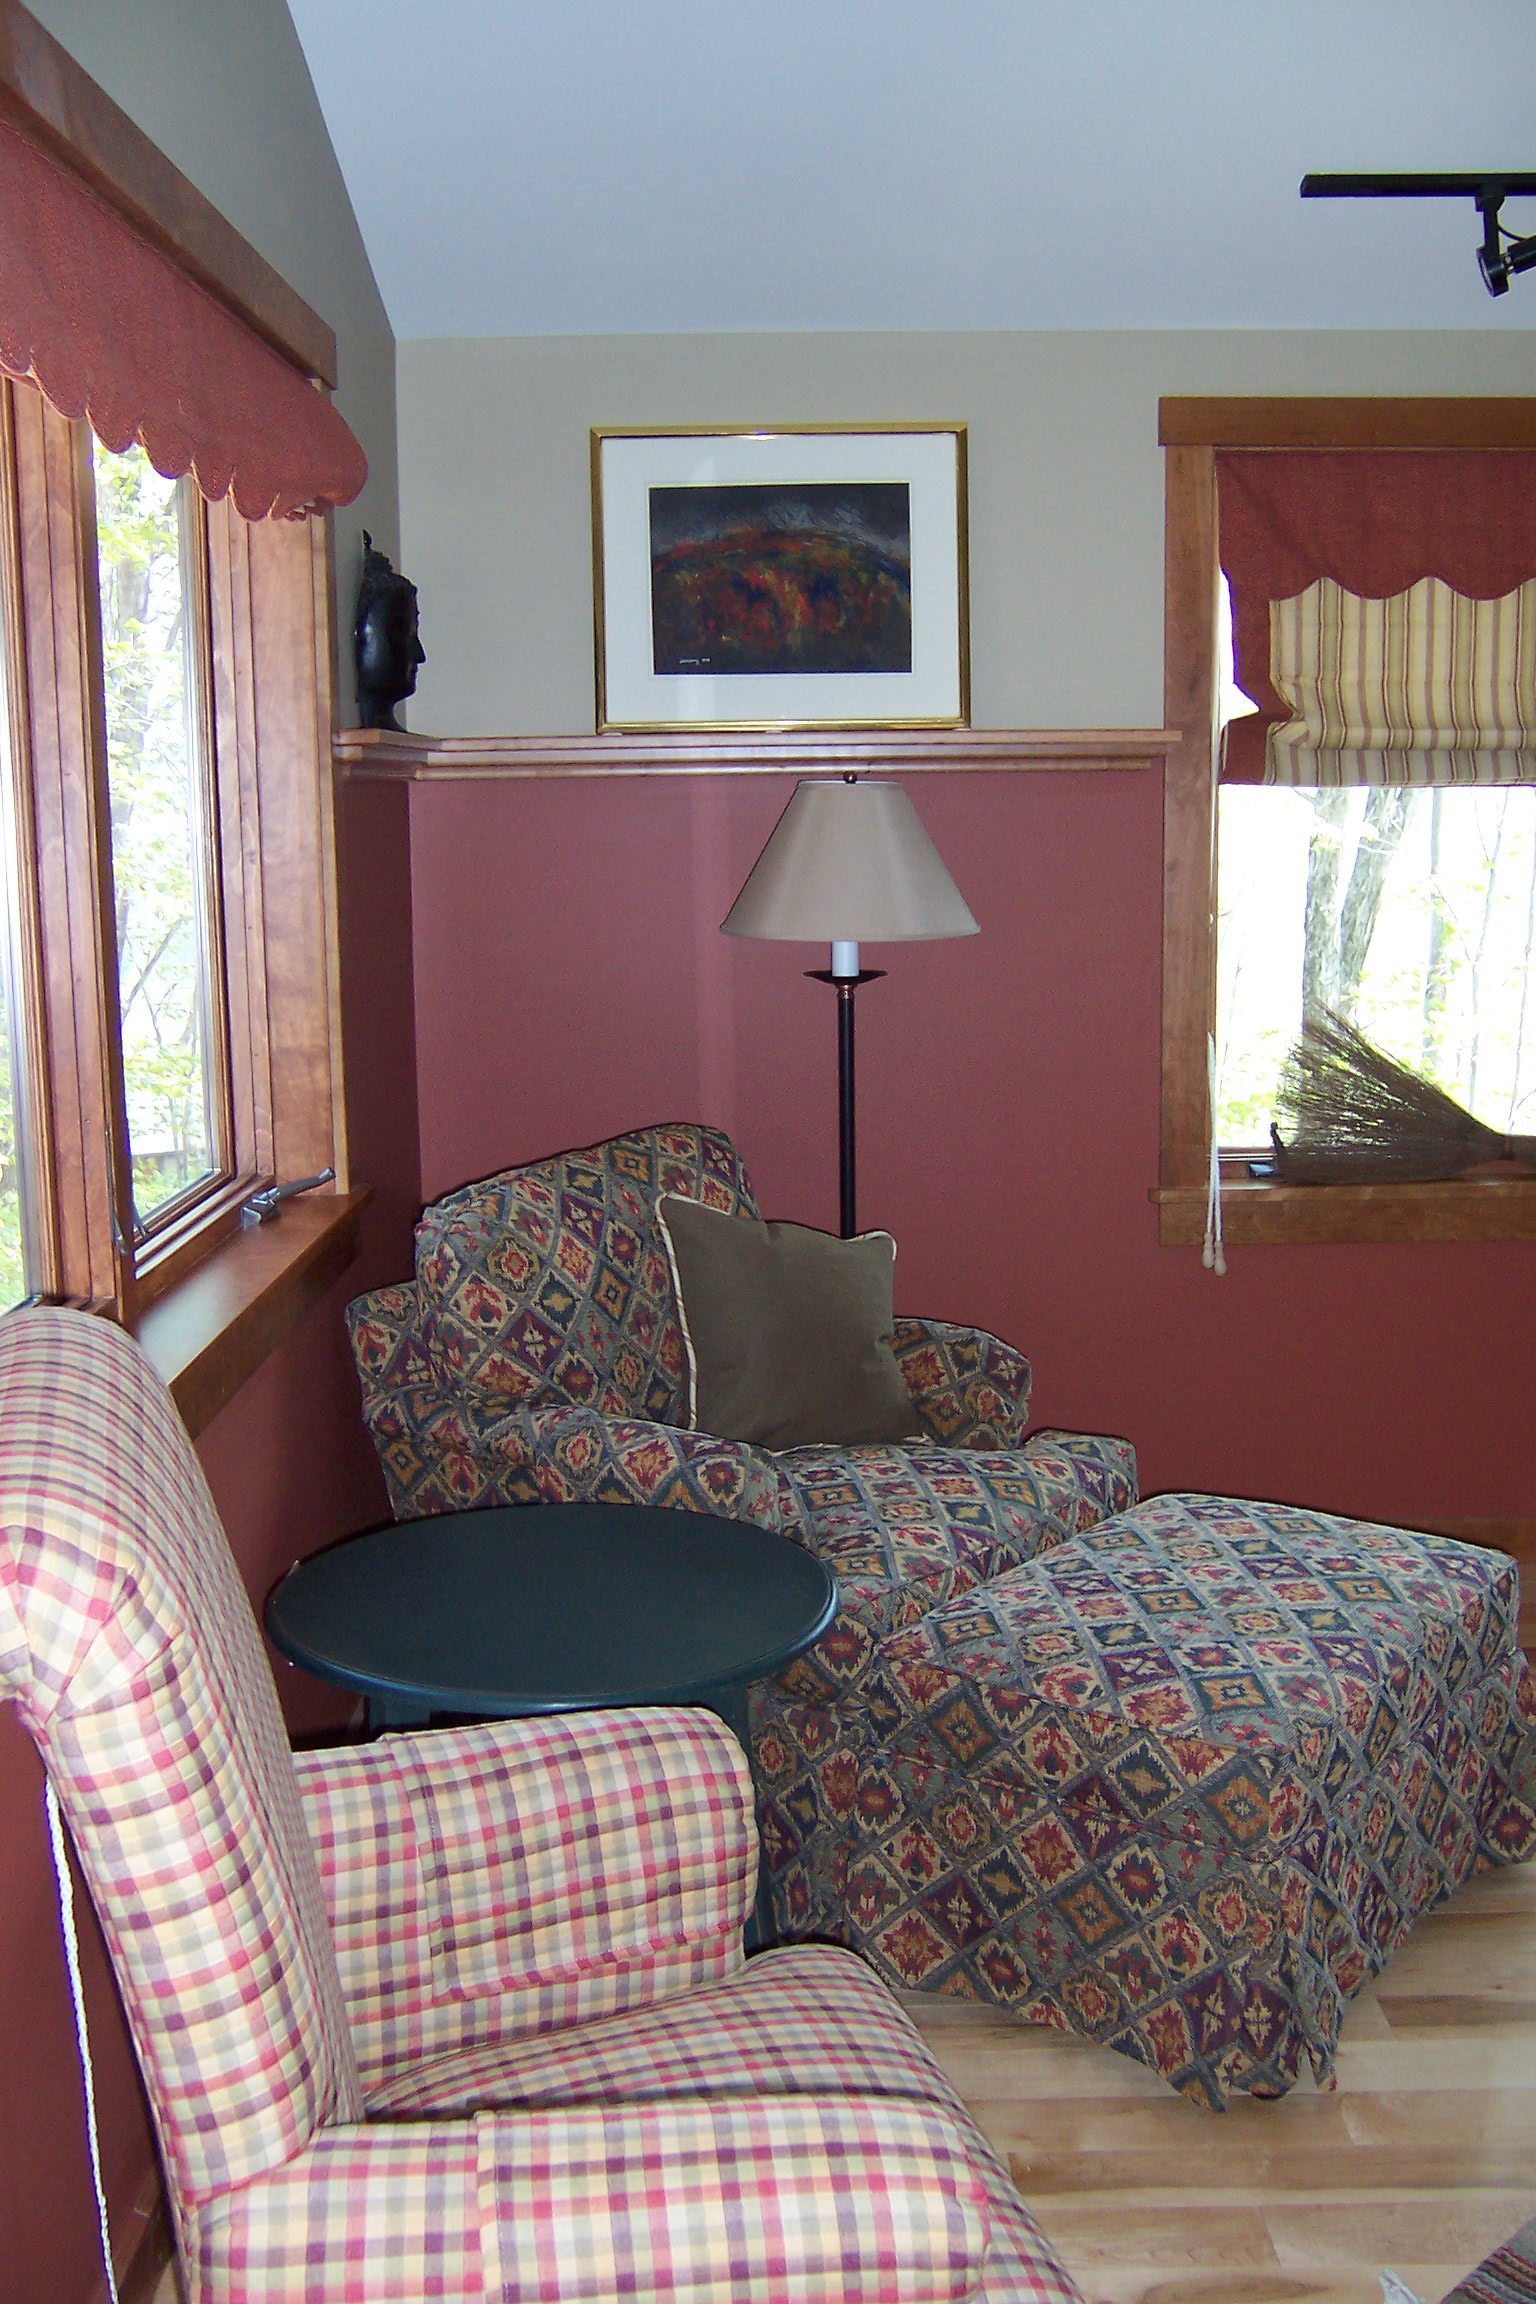 Summer House Studio - Our Vermont Interior Design Philosophy